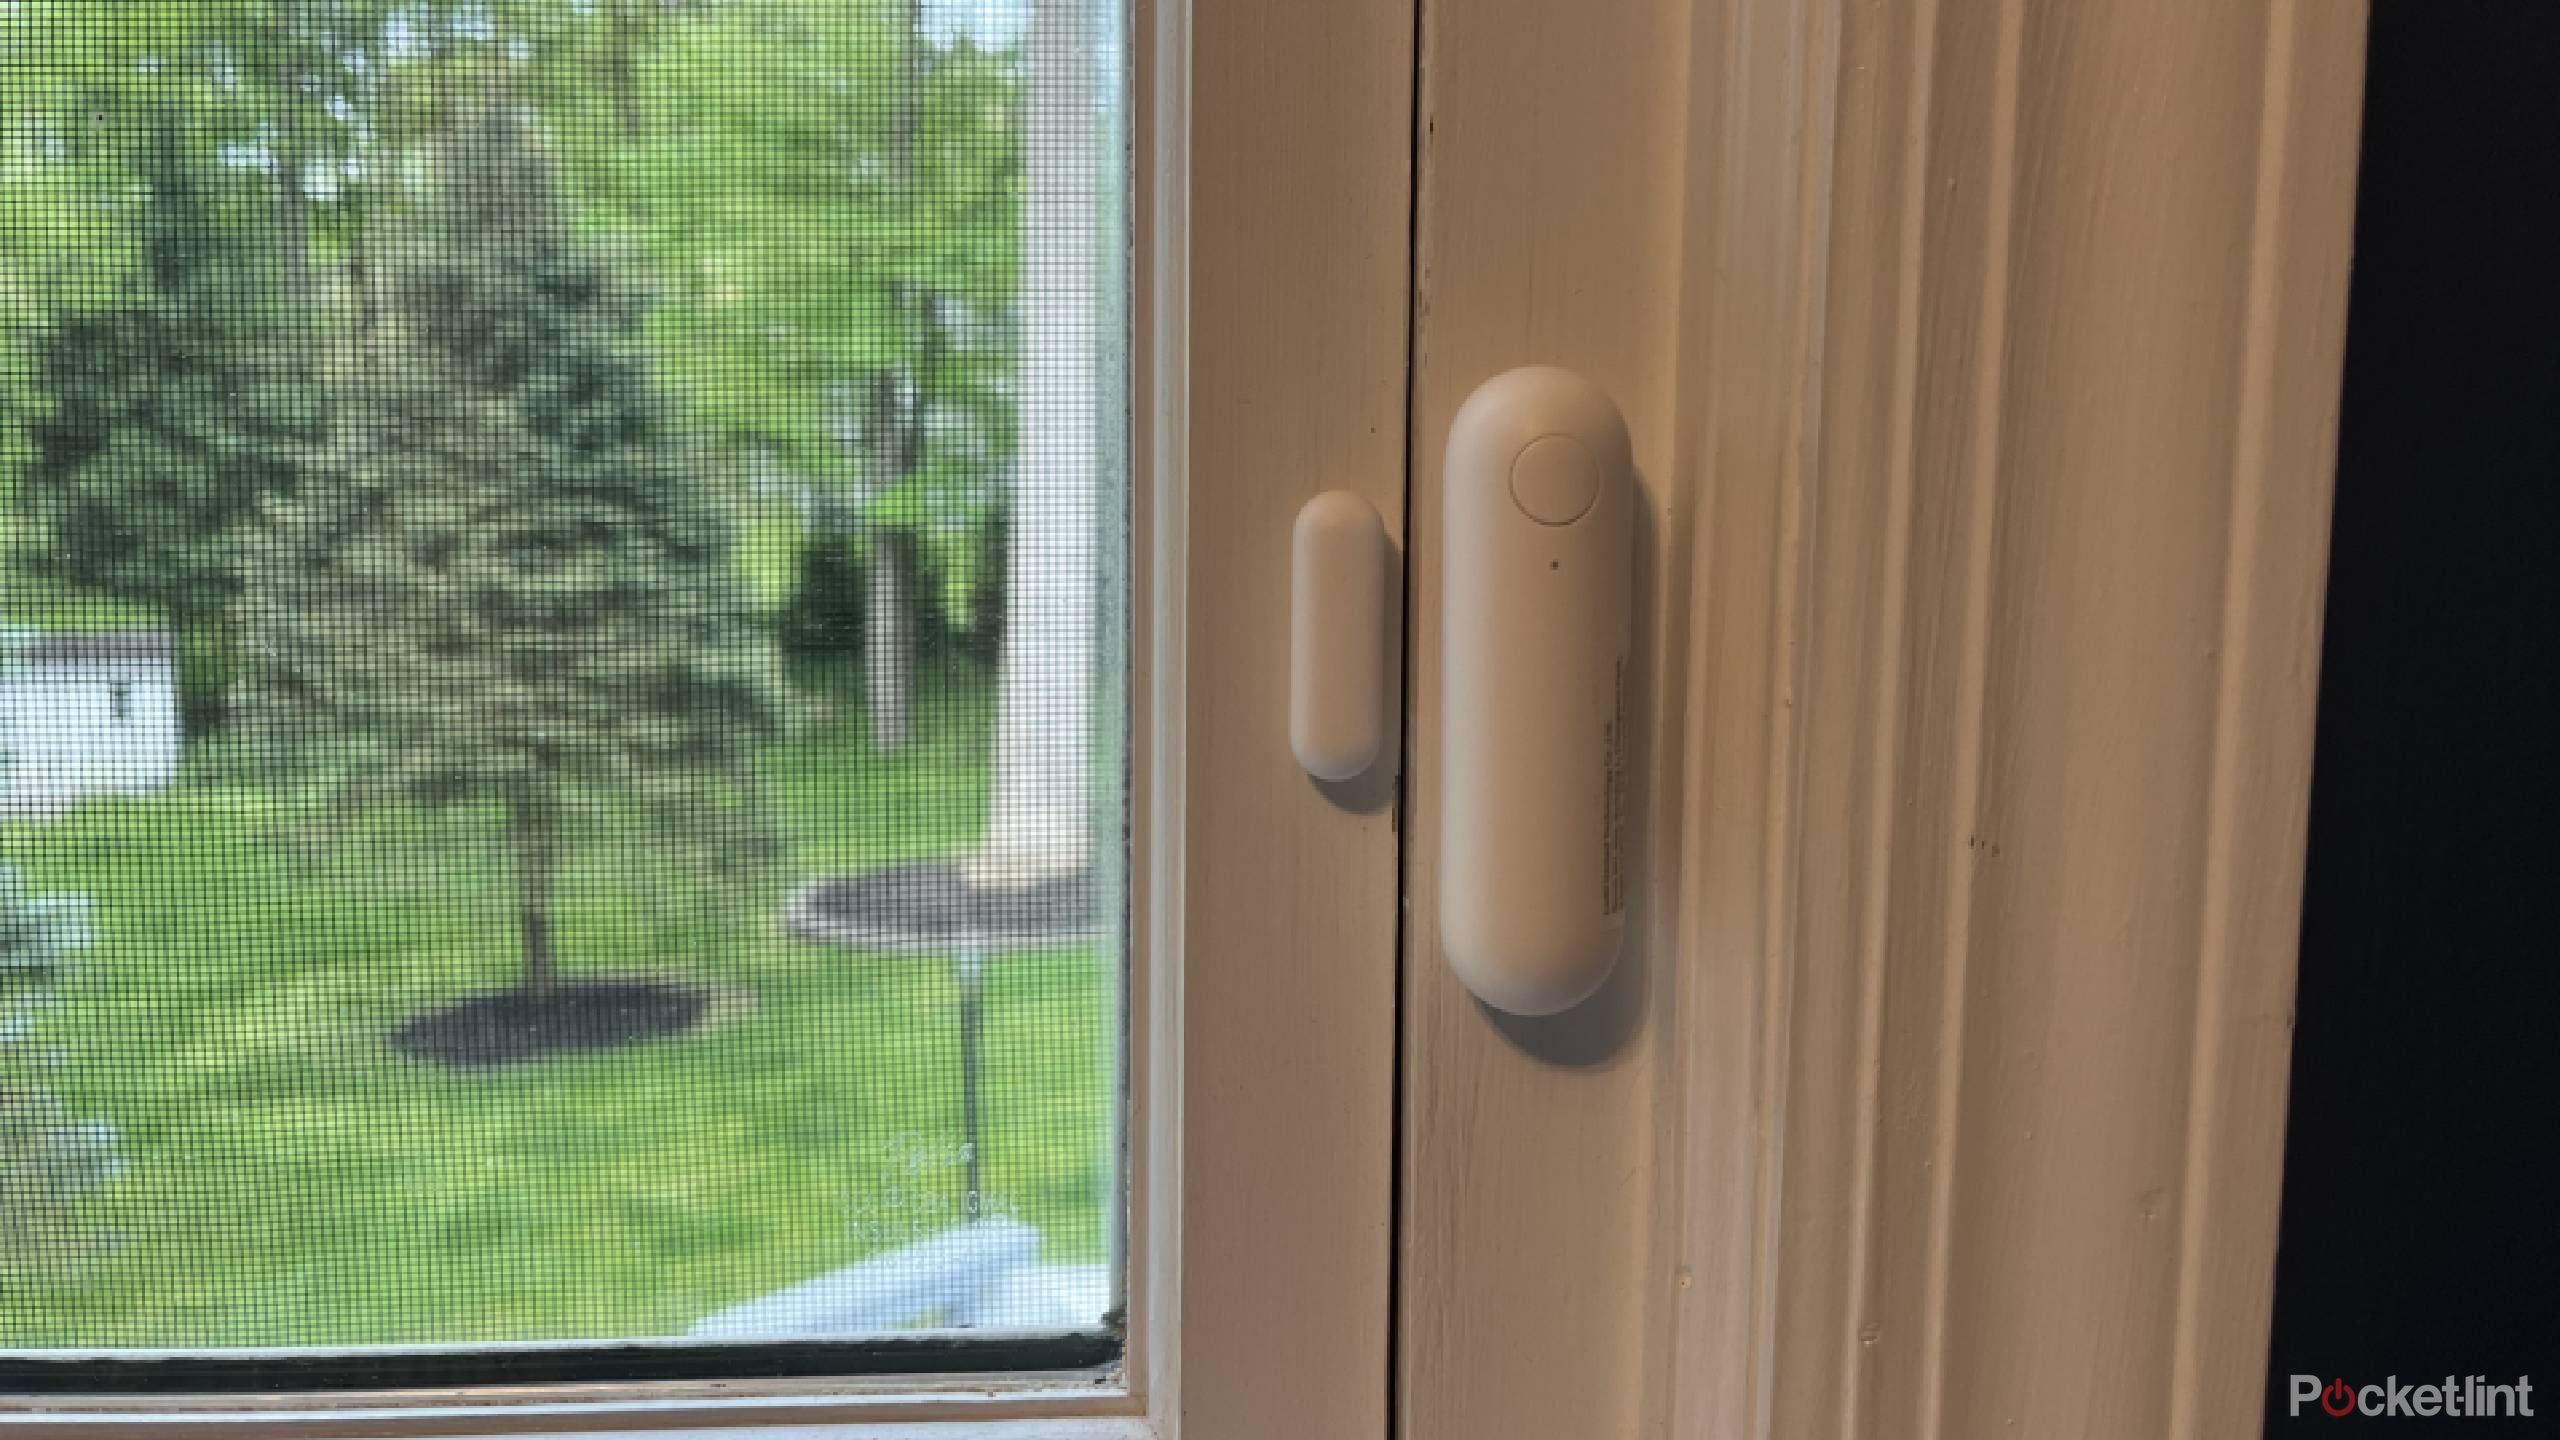 An Aqara door and window sensor P2 installed on a white window frame.